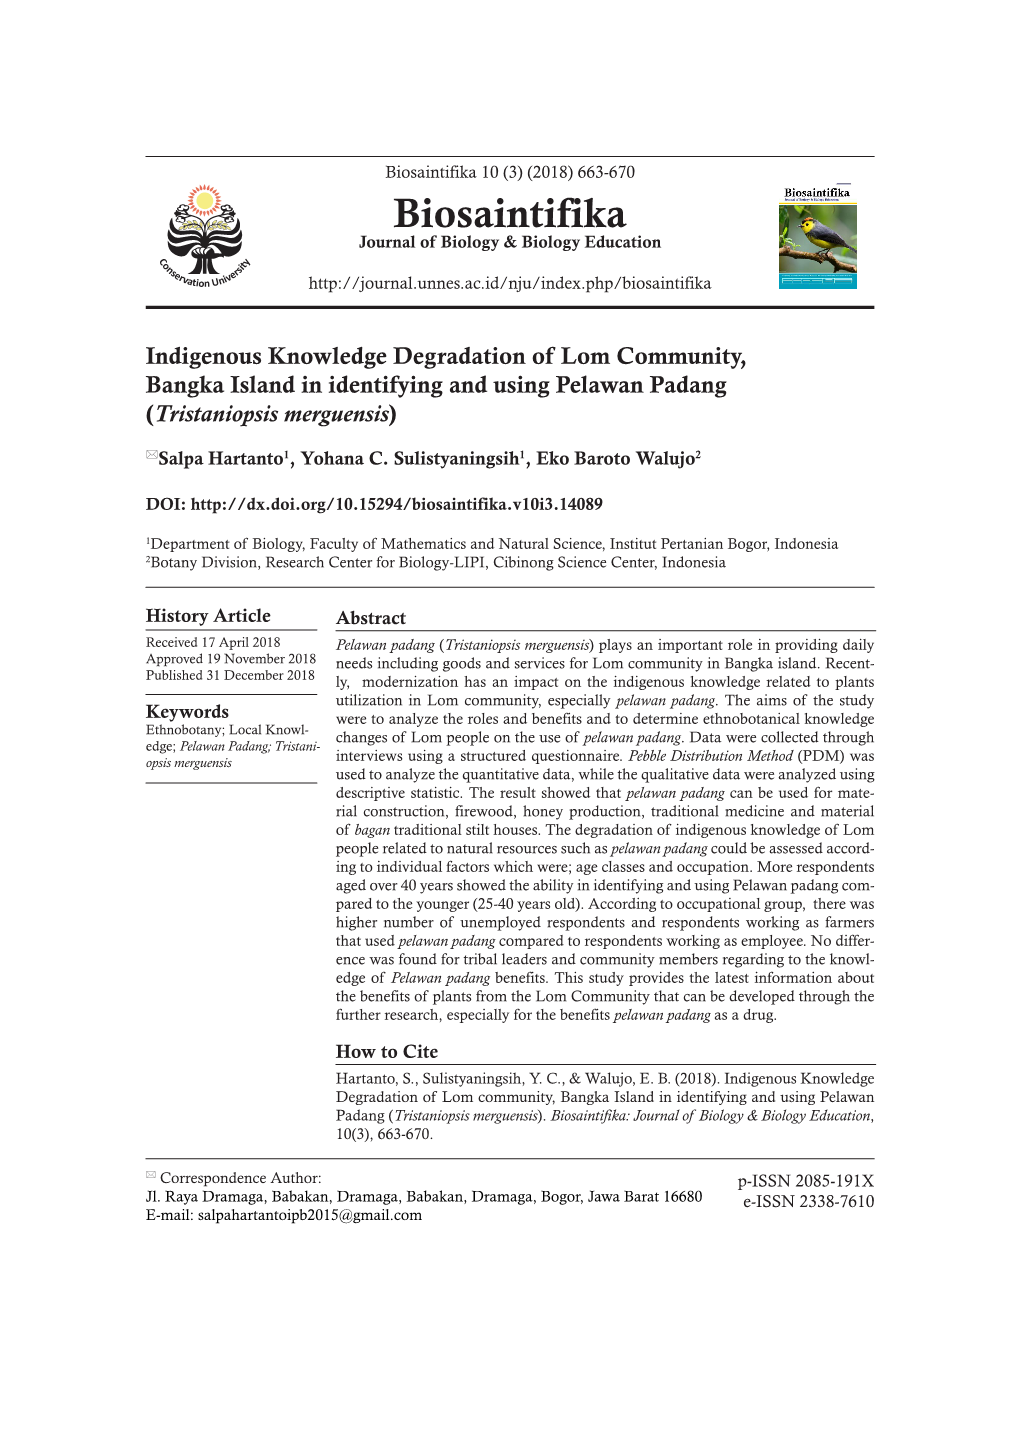 Indigenous Knowledge Degradation of Lom Community, Bangka Island in Identifying and Using Pelawan Padang (Tristaniopsis Merguensis)